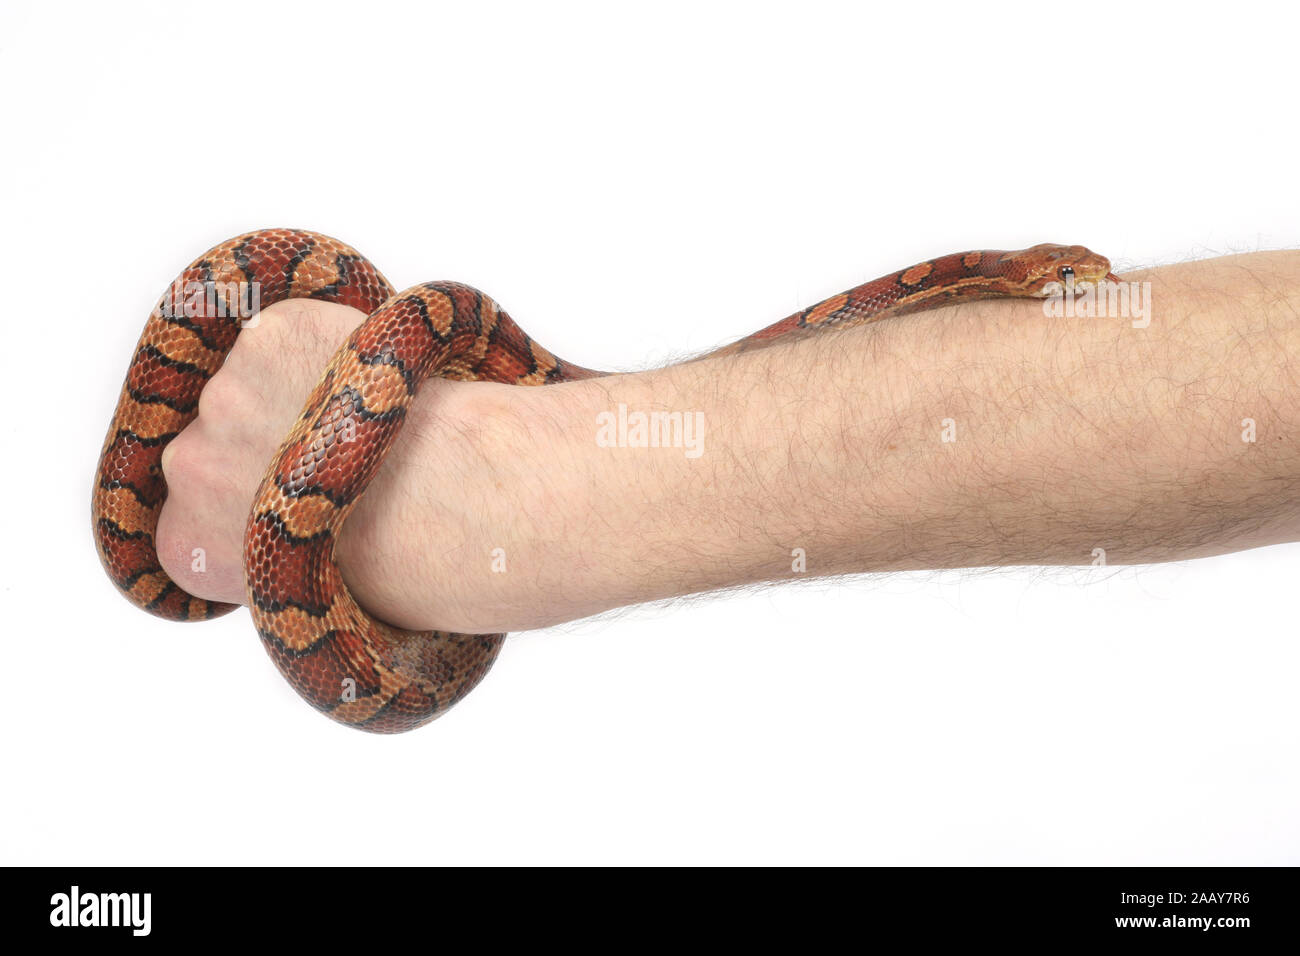 Kornnatter (Elaphe guttata), kriecht ueber einen Arm | corn snake (Elaphe guttata), rampant sur les droits de l'arm | BLWS027847.jpg [ (c) blickwinkel/fotototo Banque D'Images